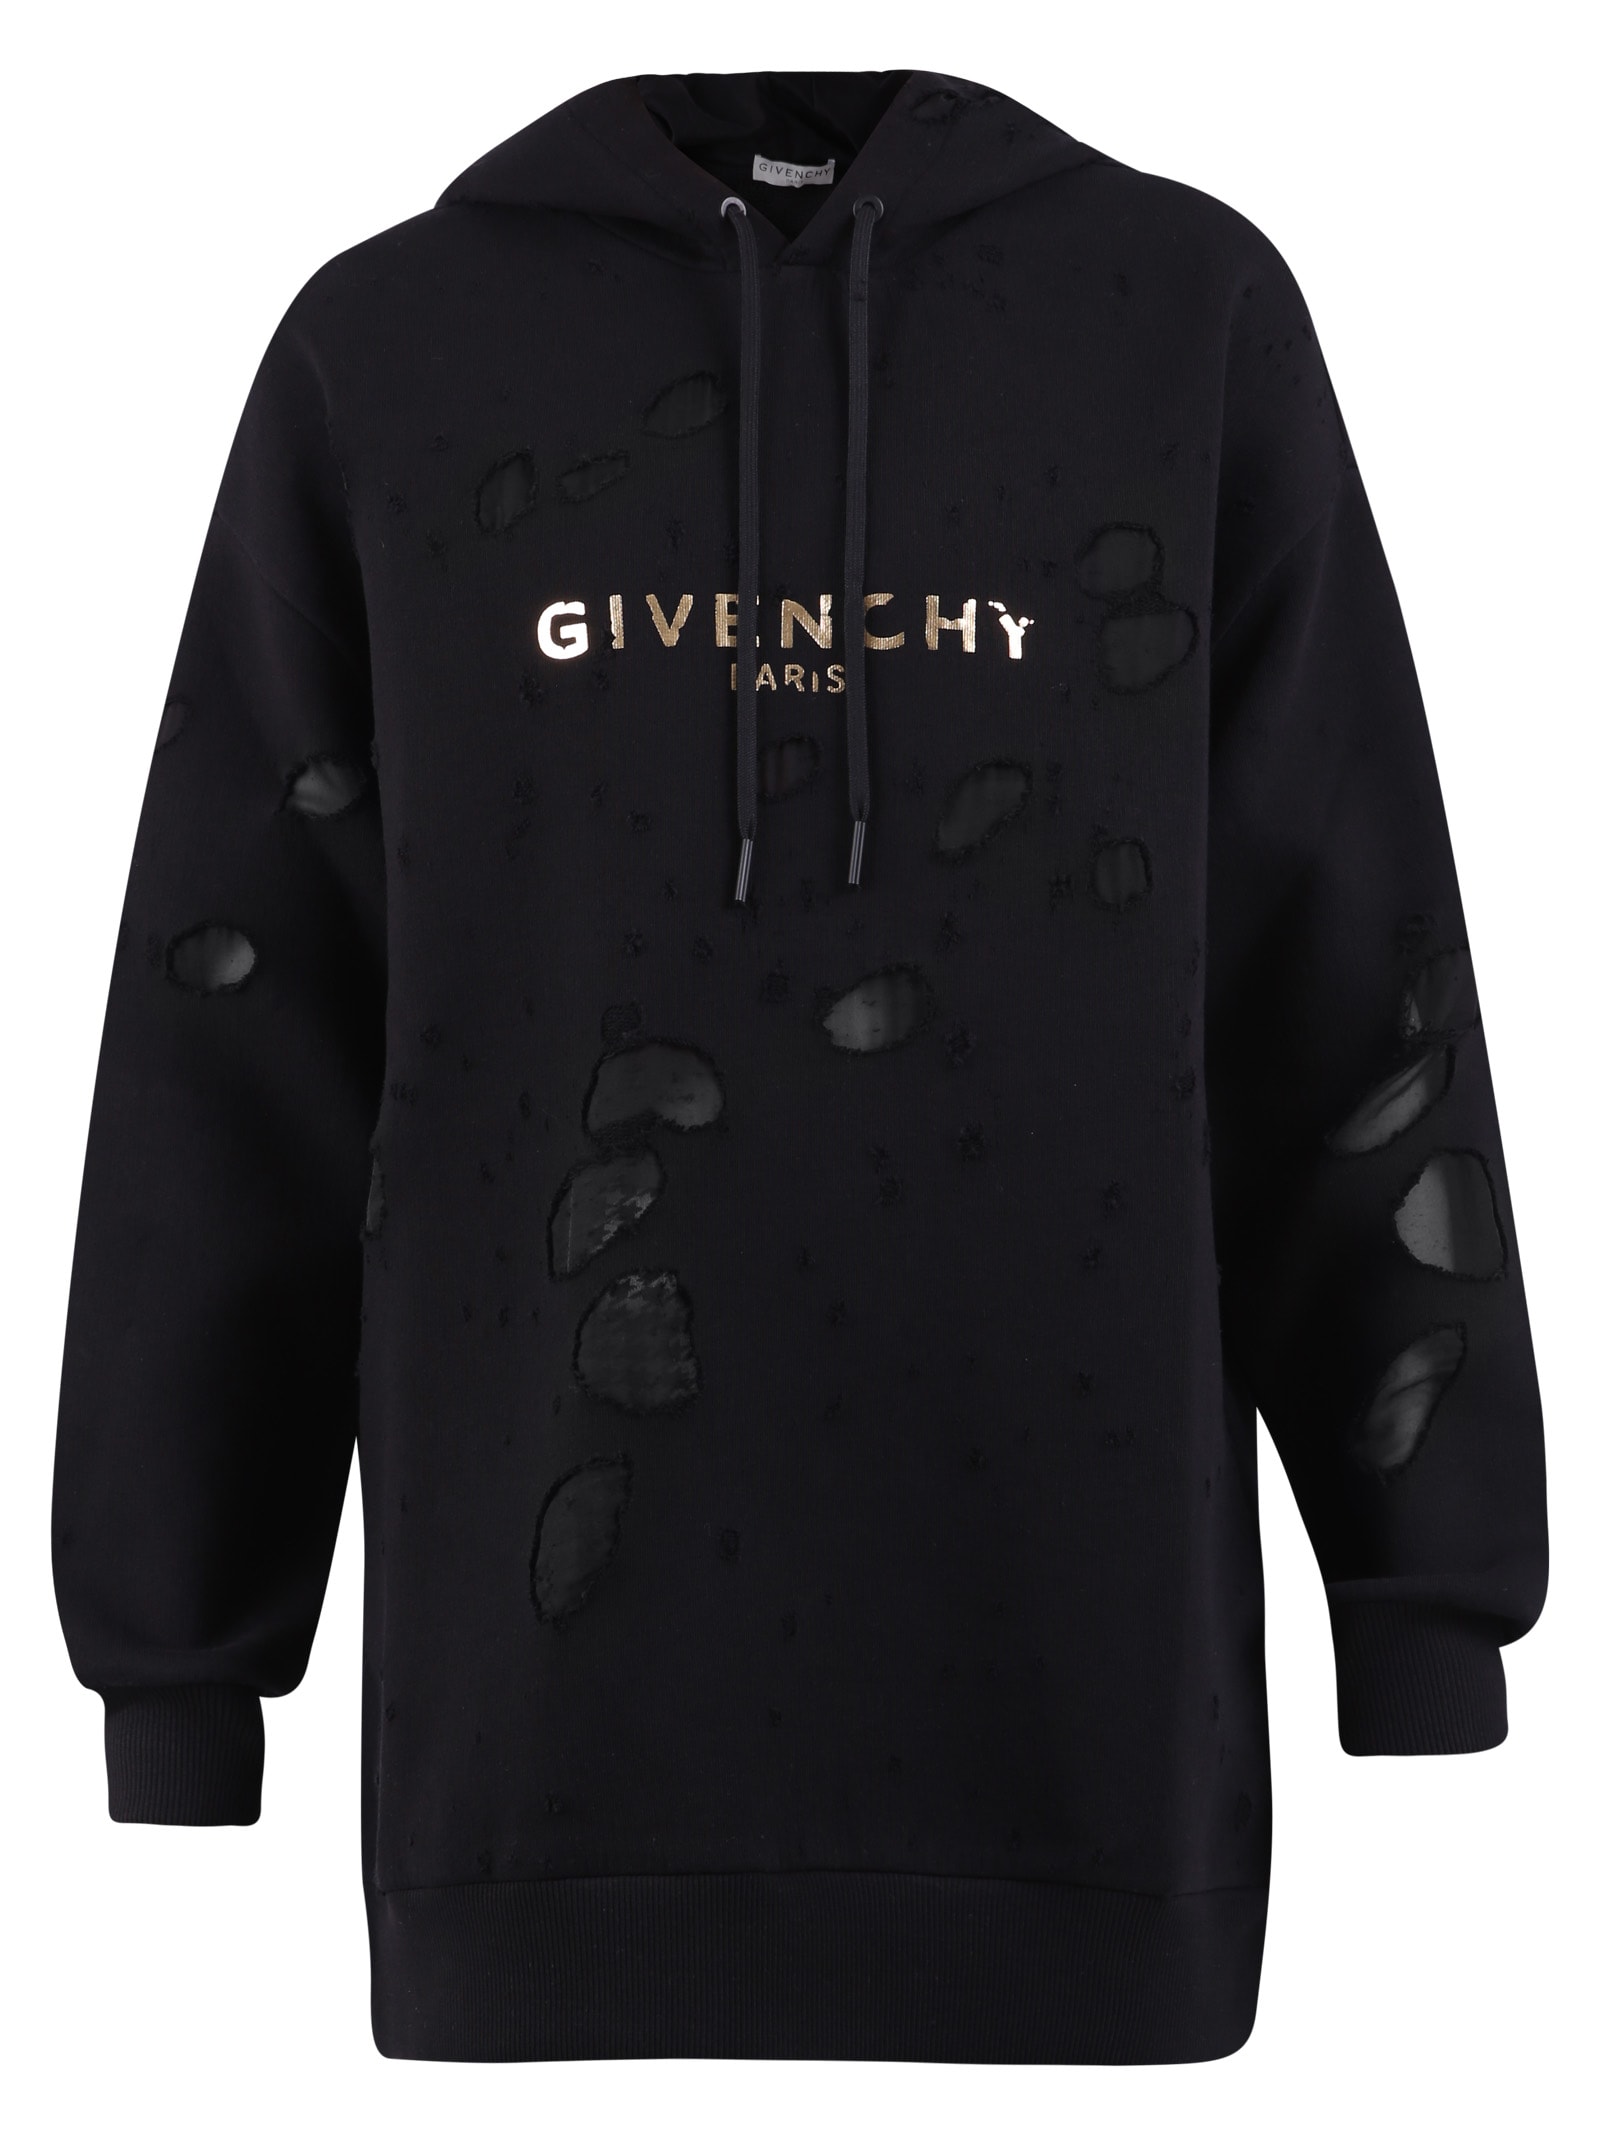 Givenchy Oversized Sweatshirt In Black/gold